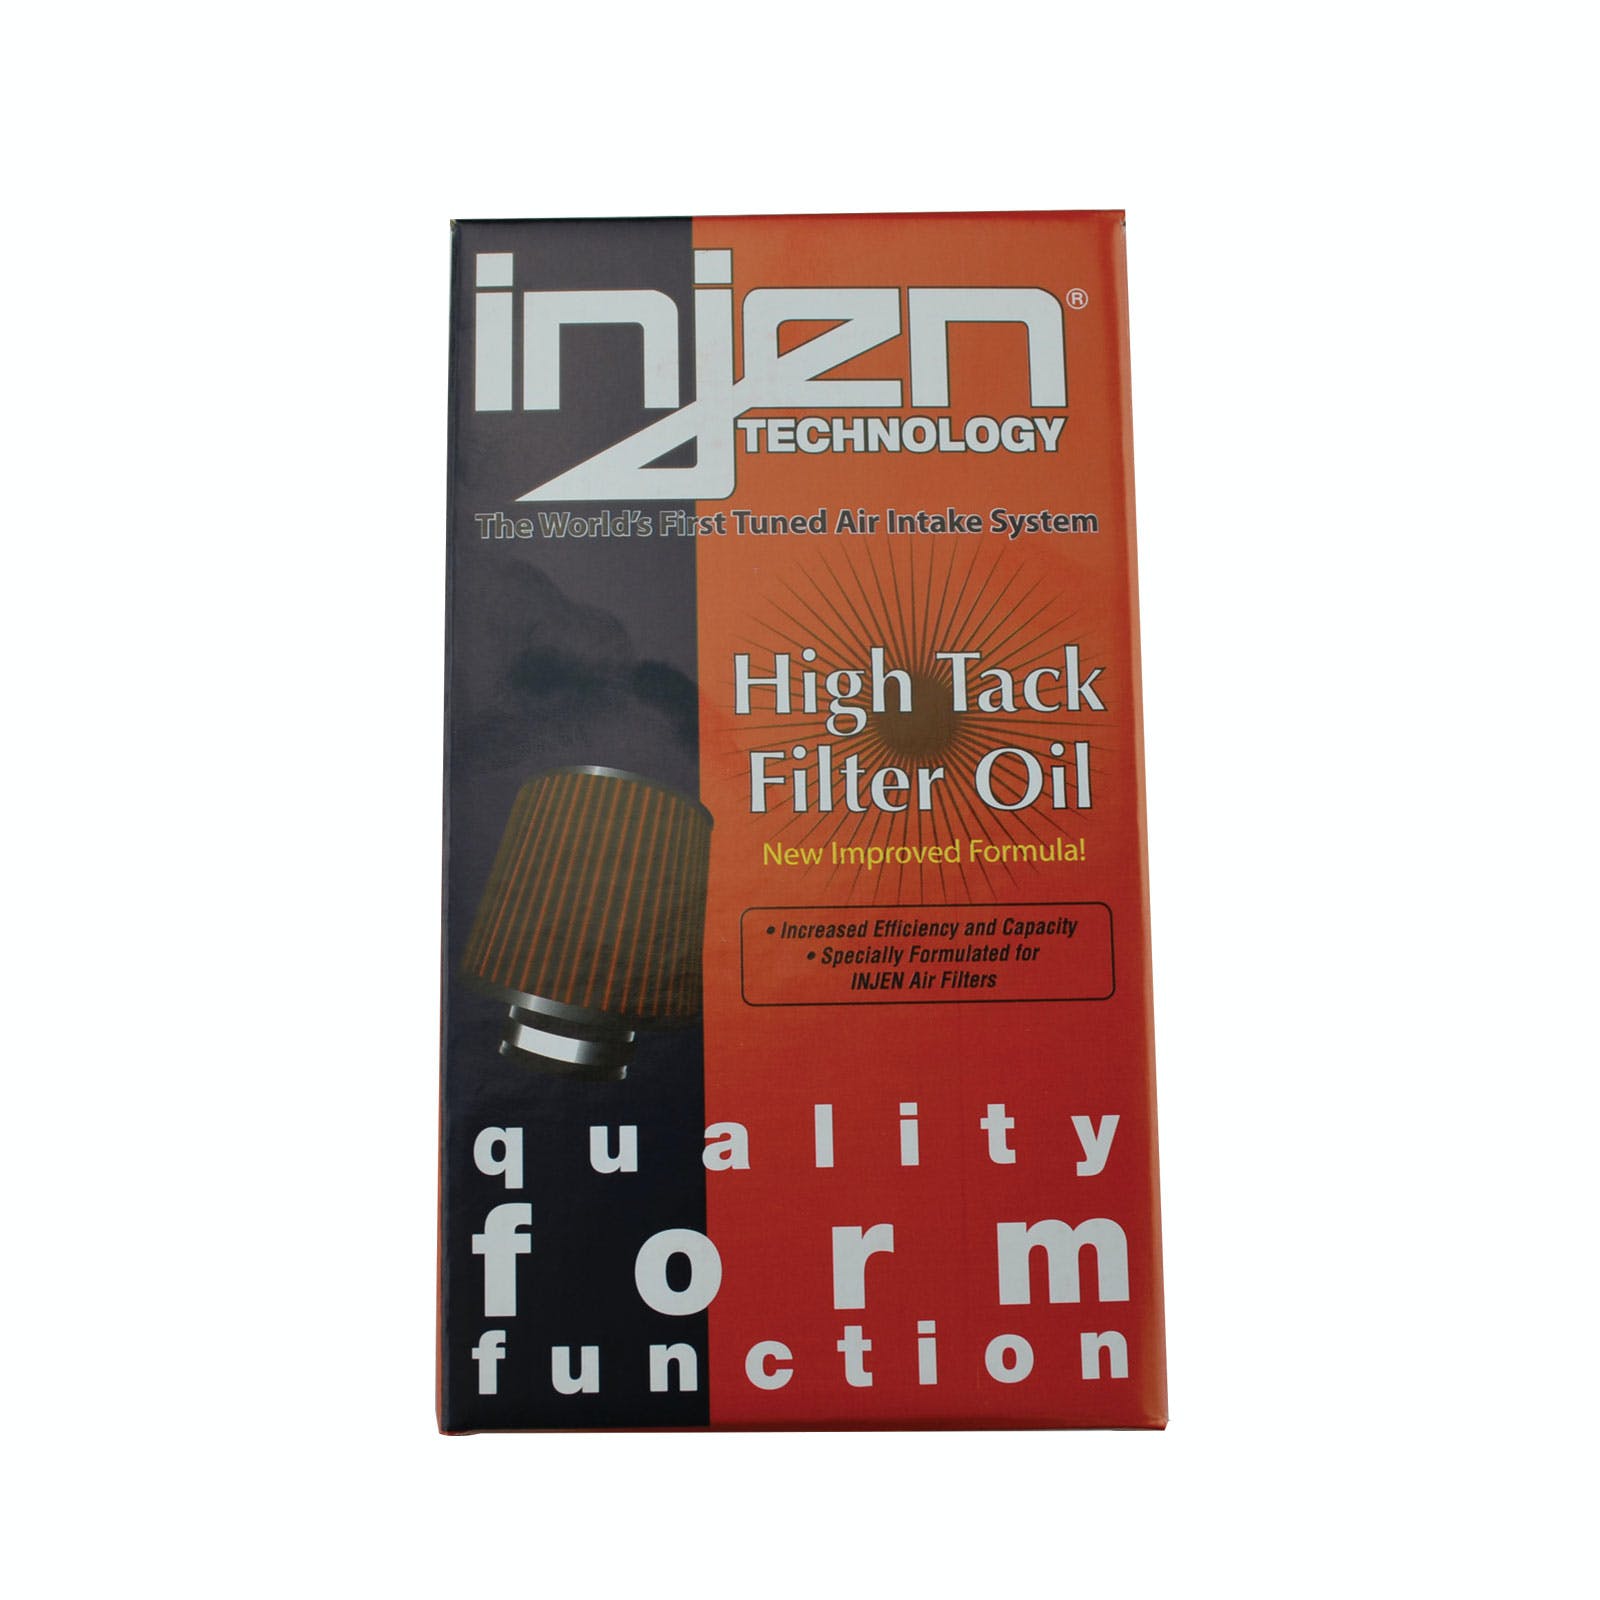 Injen Technology Co Ltd X-1030 Cleaning Kit